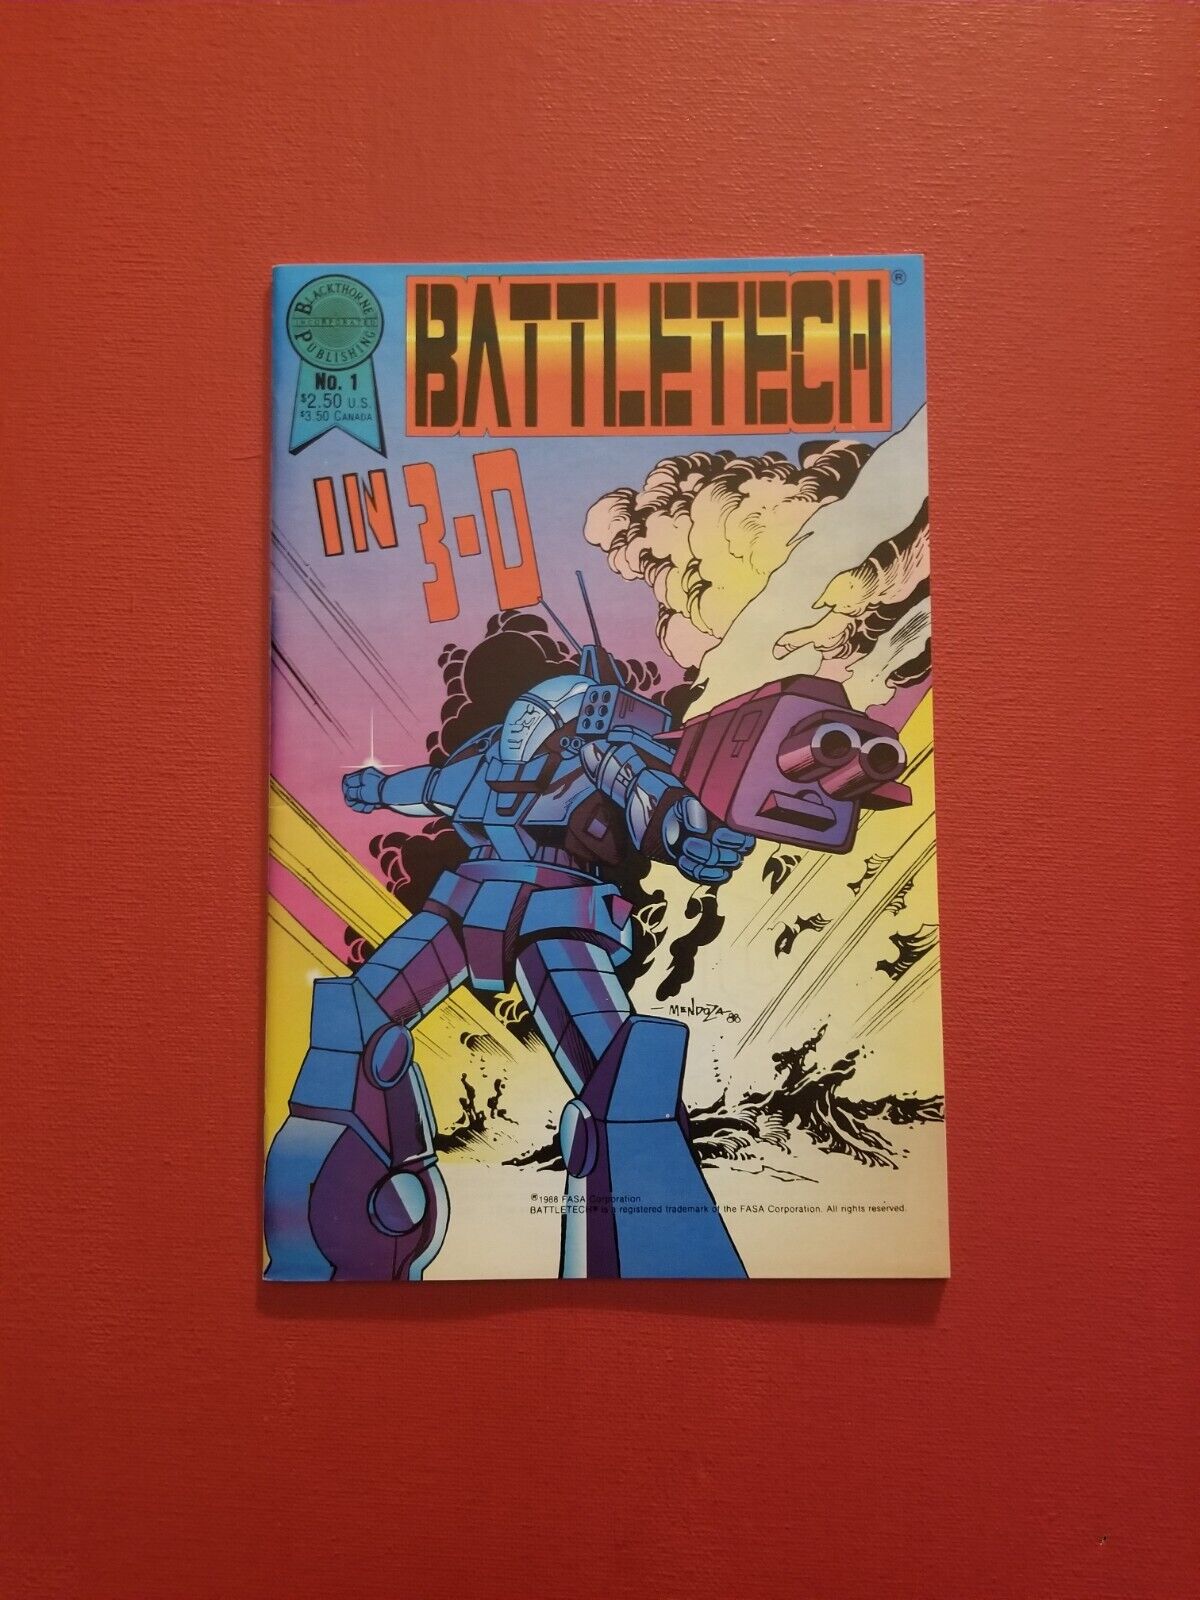 BLACKTHORNE PUBLISHING - BATTLETECH IN 3D #1 COMIC BOOK - 1987